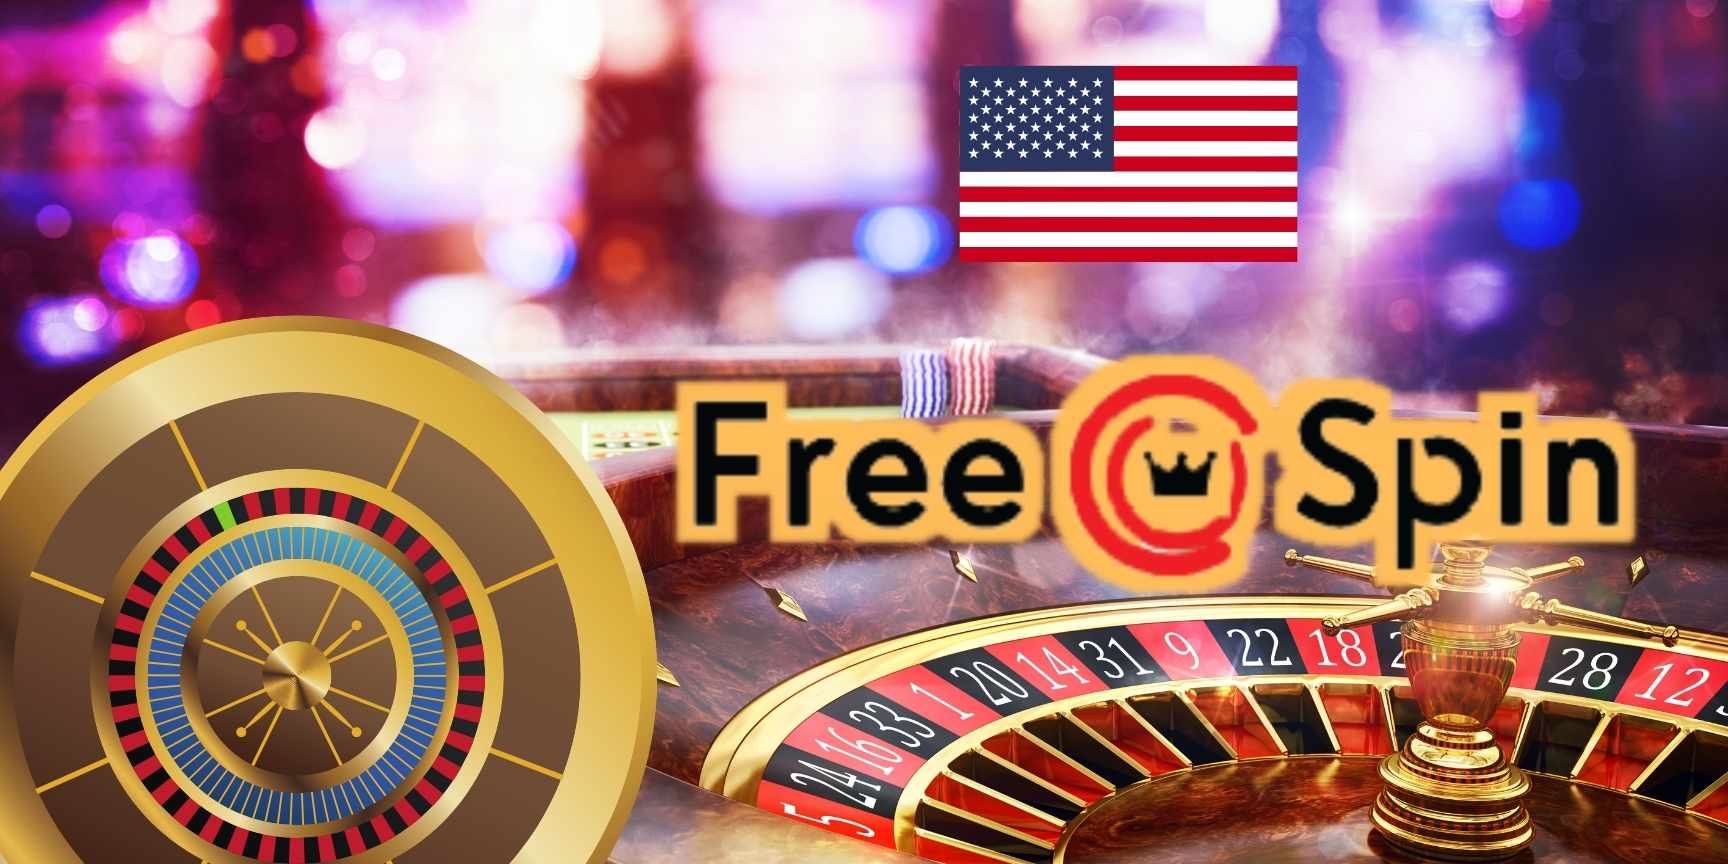 Free Spin casino